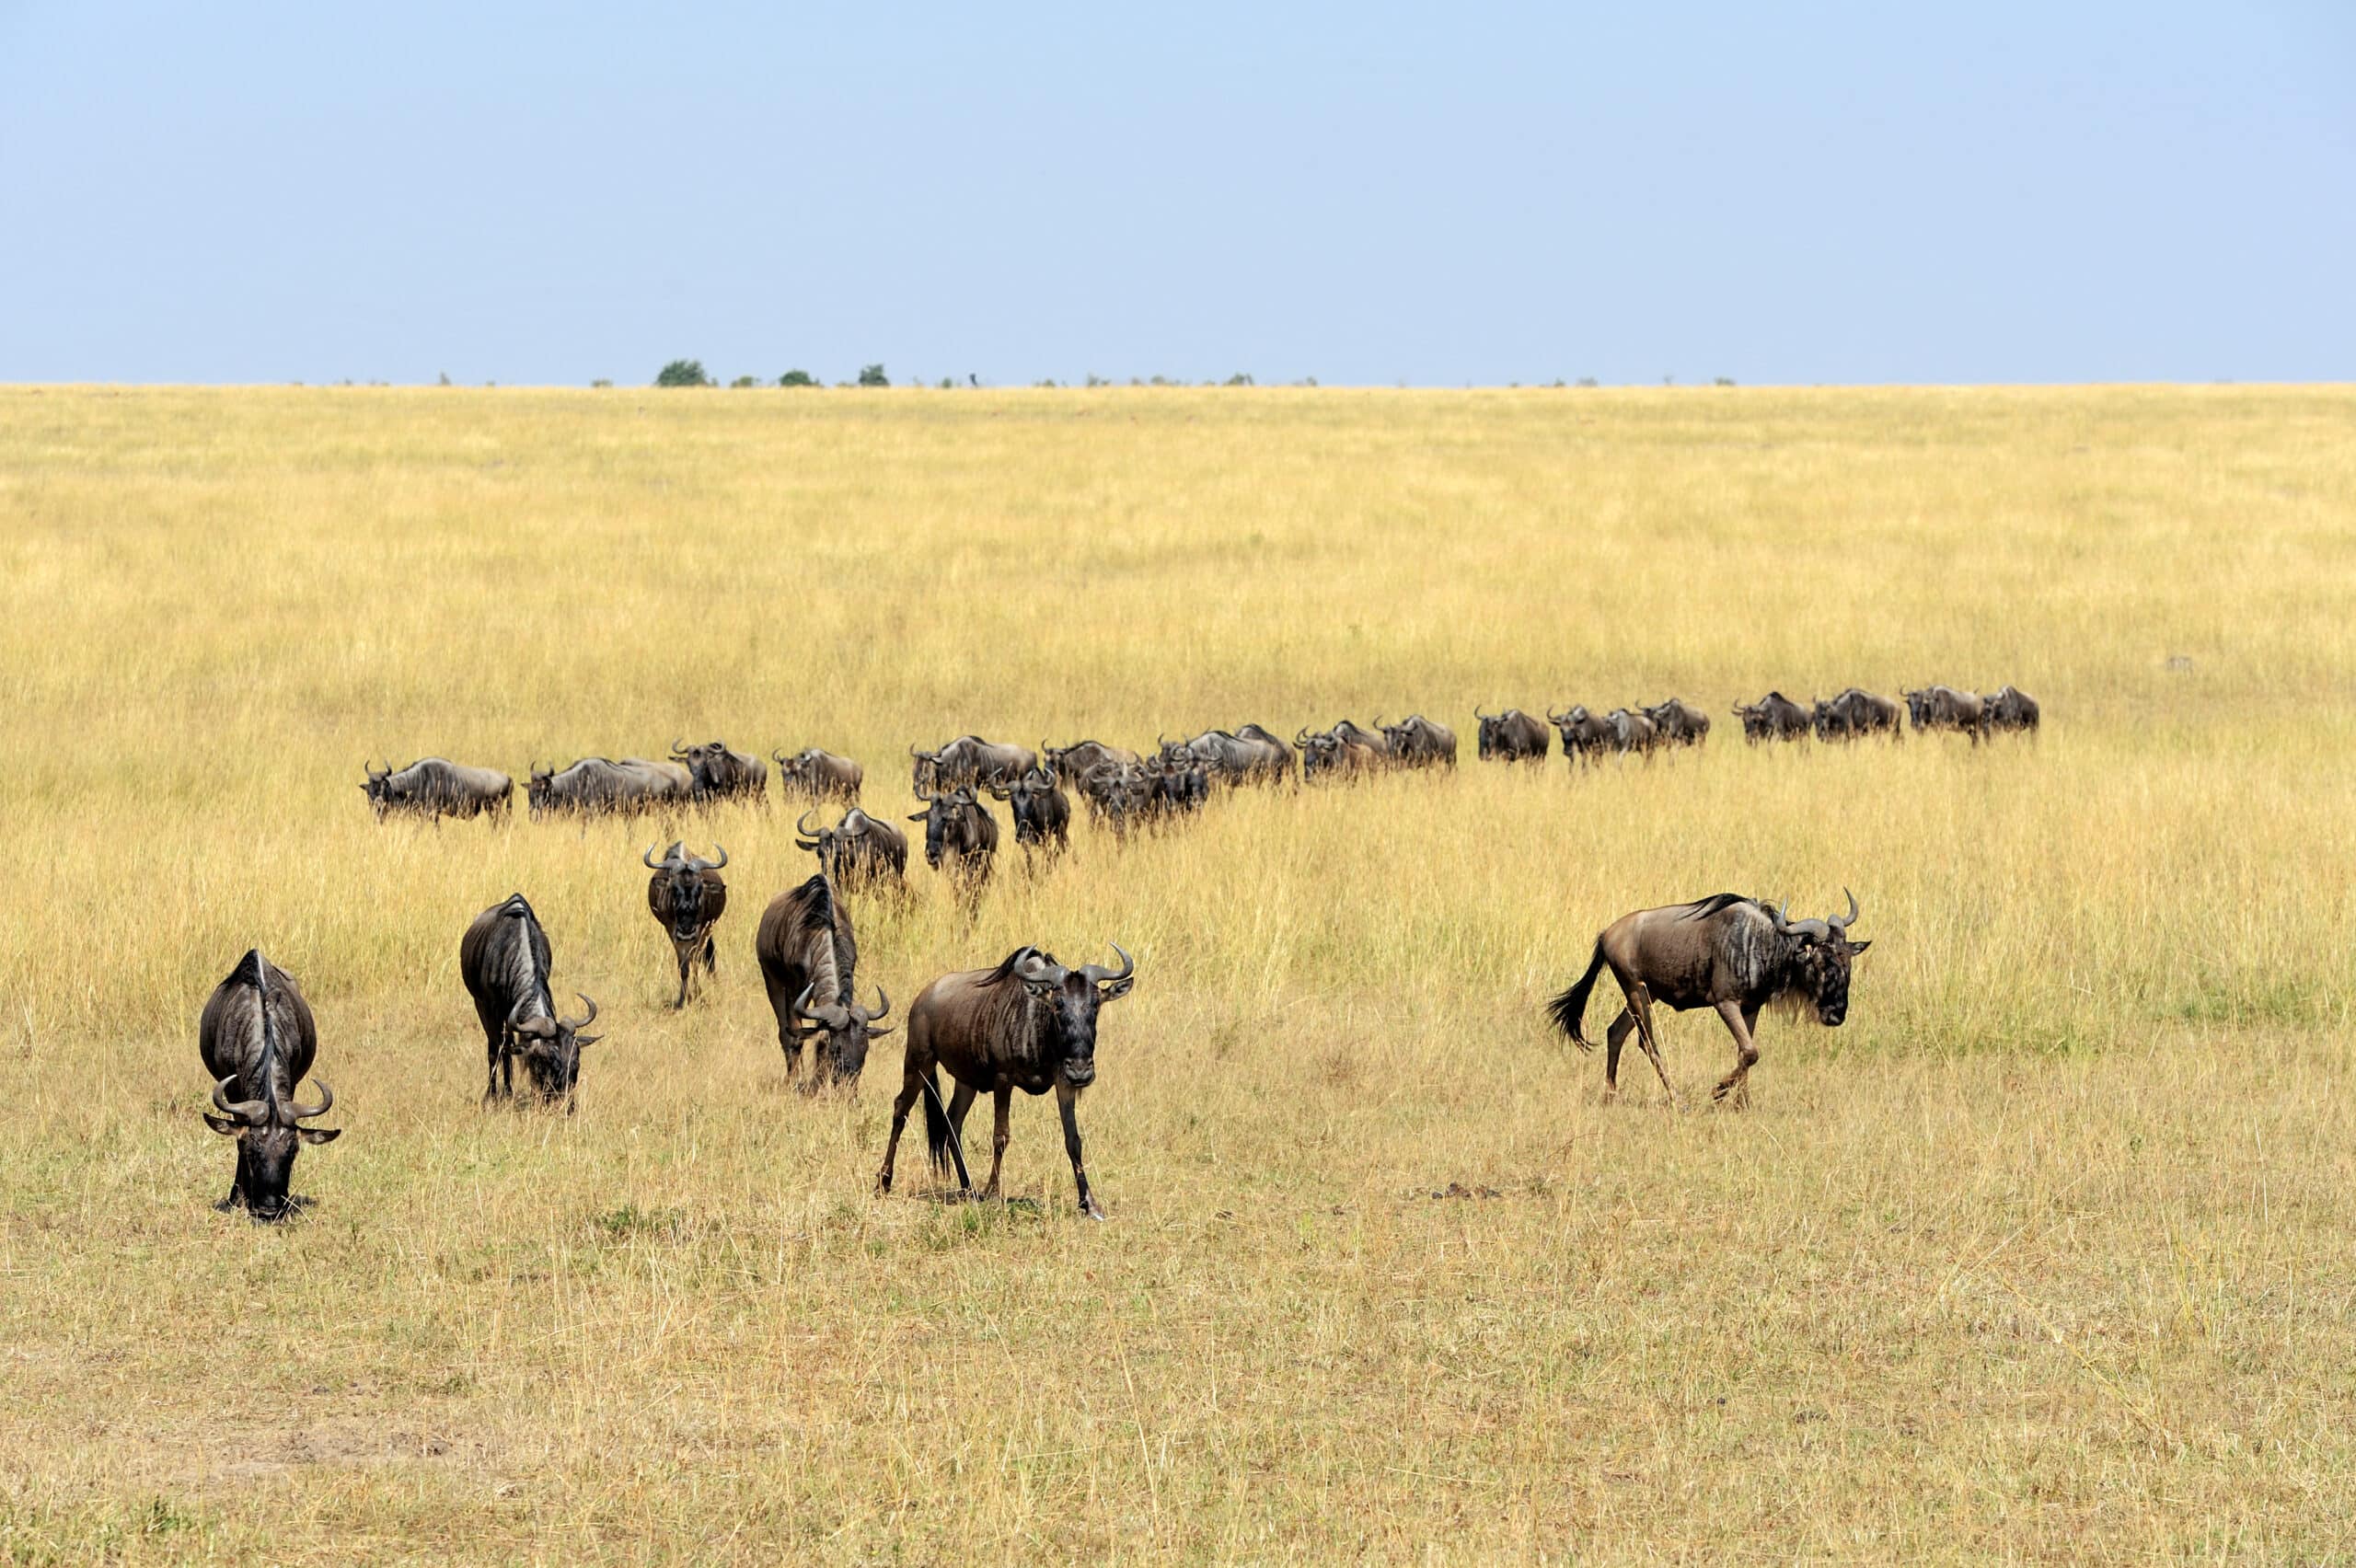 wildebeest in national park of kenya 2021 08 26 15 55 38 utc scaled